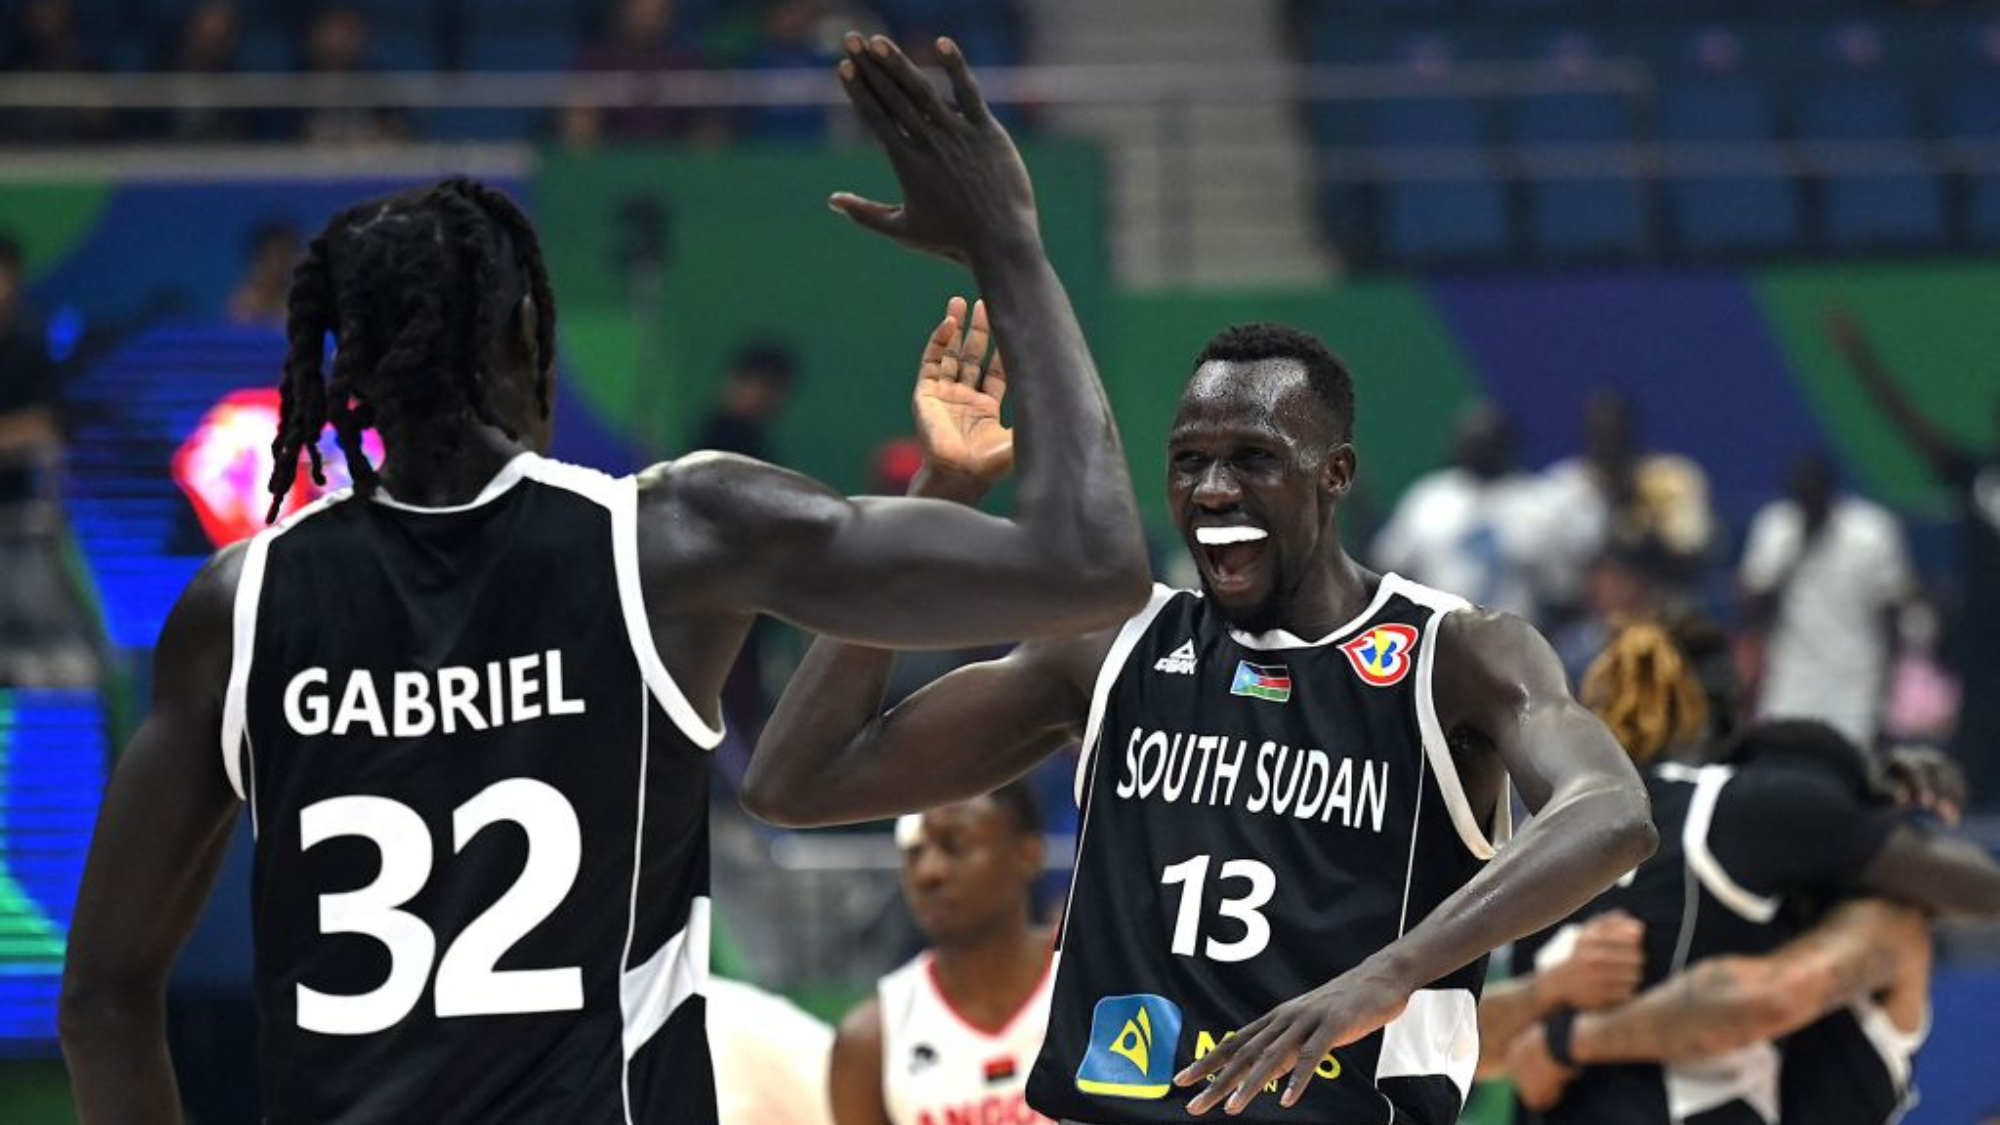 South Sudan's basketball stars